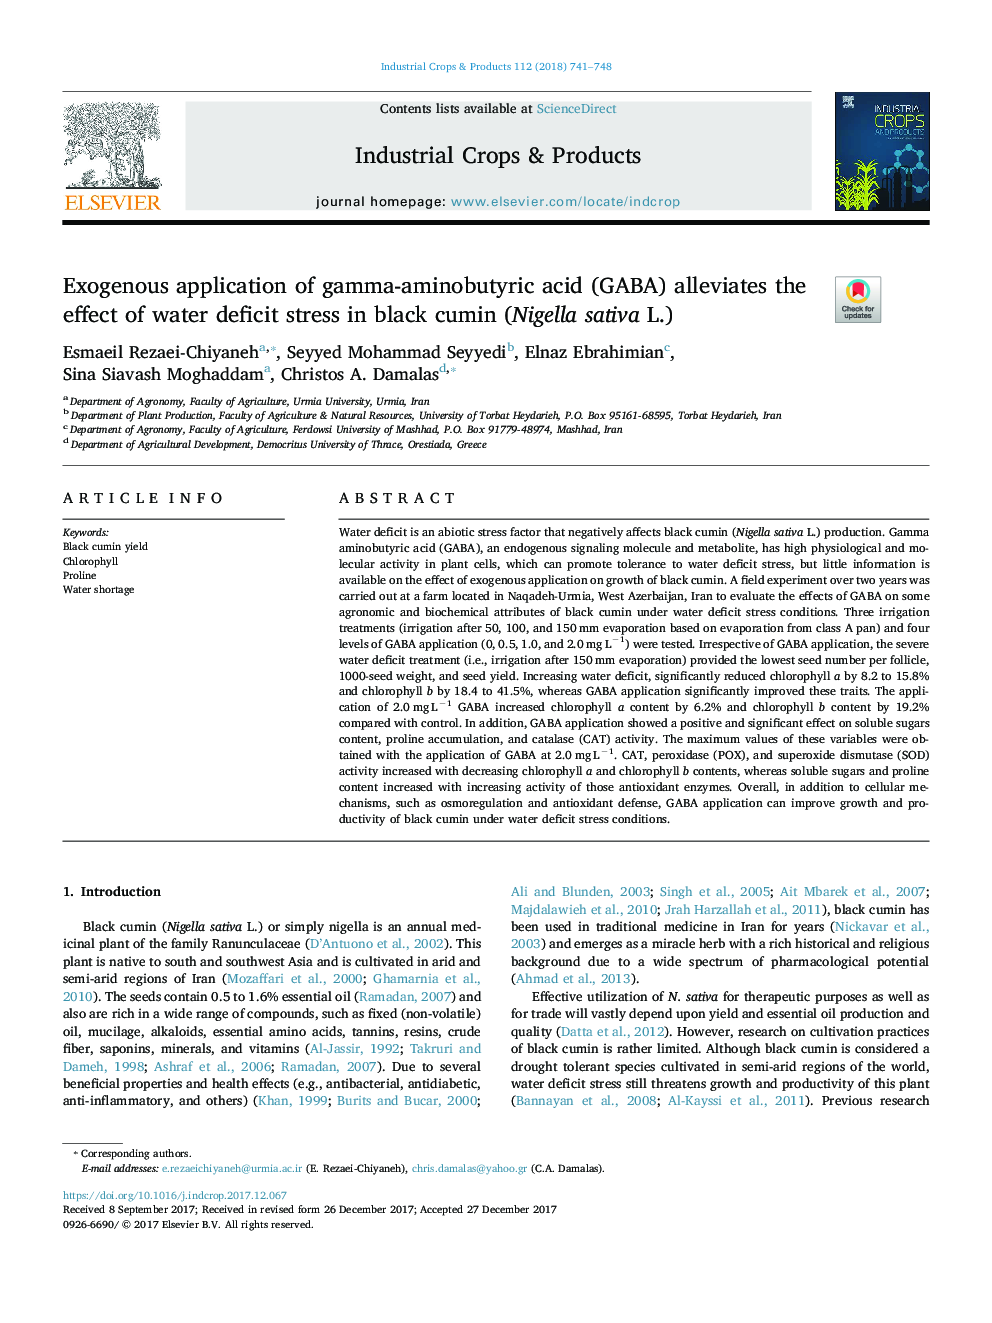 Exogenous application of gamma-aminobutyric acid (GABA) alleviates the effect of water deficit stress in black cumin (Nigella sativa L.)